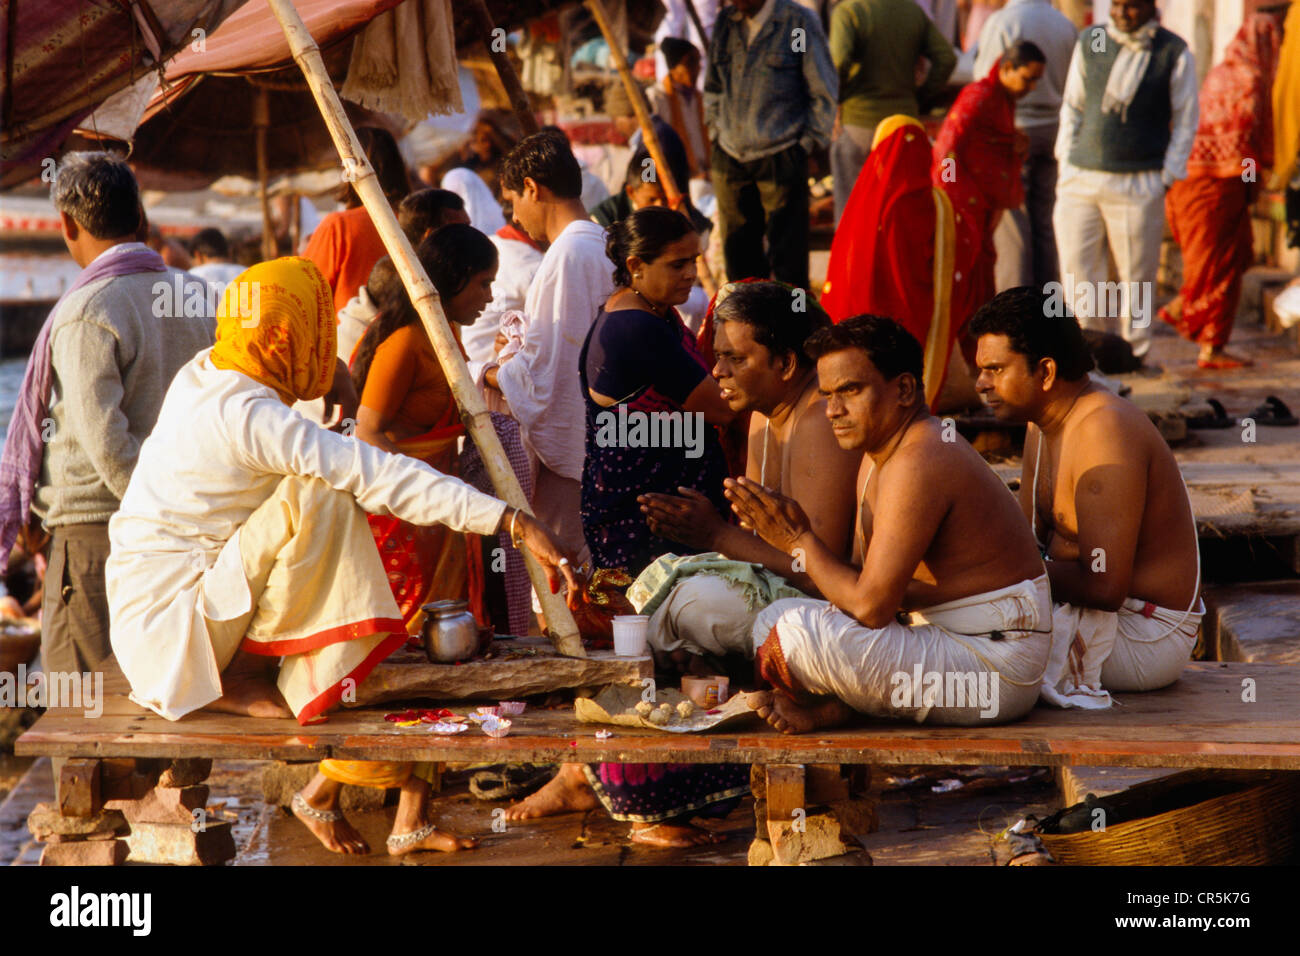 Priest offering ceremonies and blessings to pilgrims, Varanasi, Uttar Pradesh, India, Asia Stock Photo